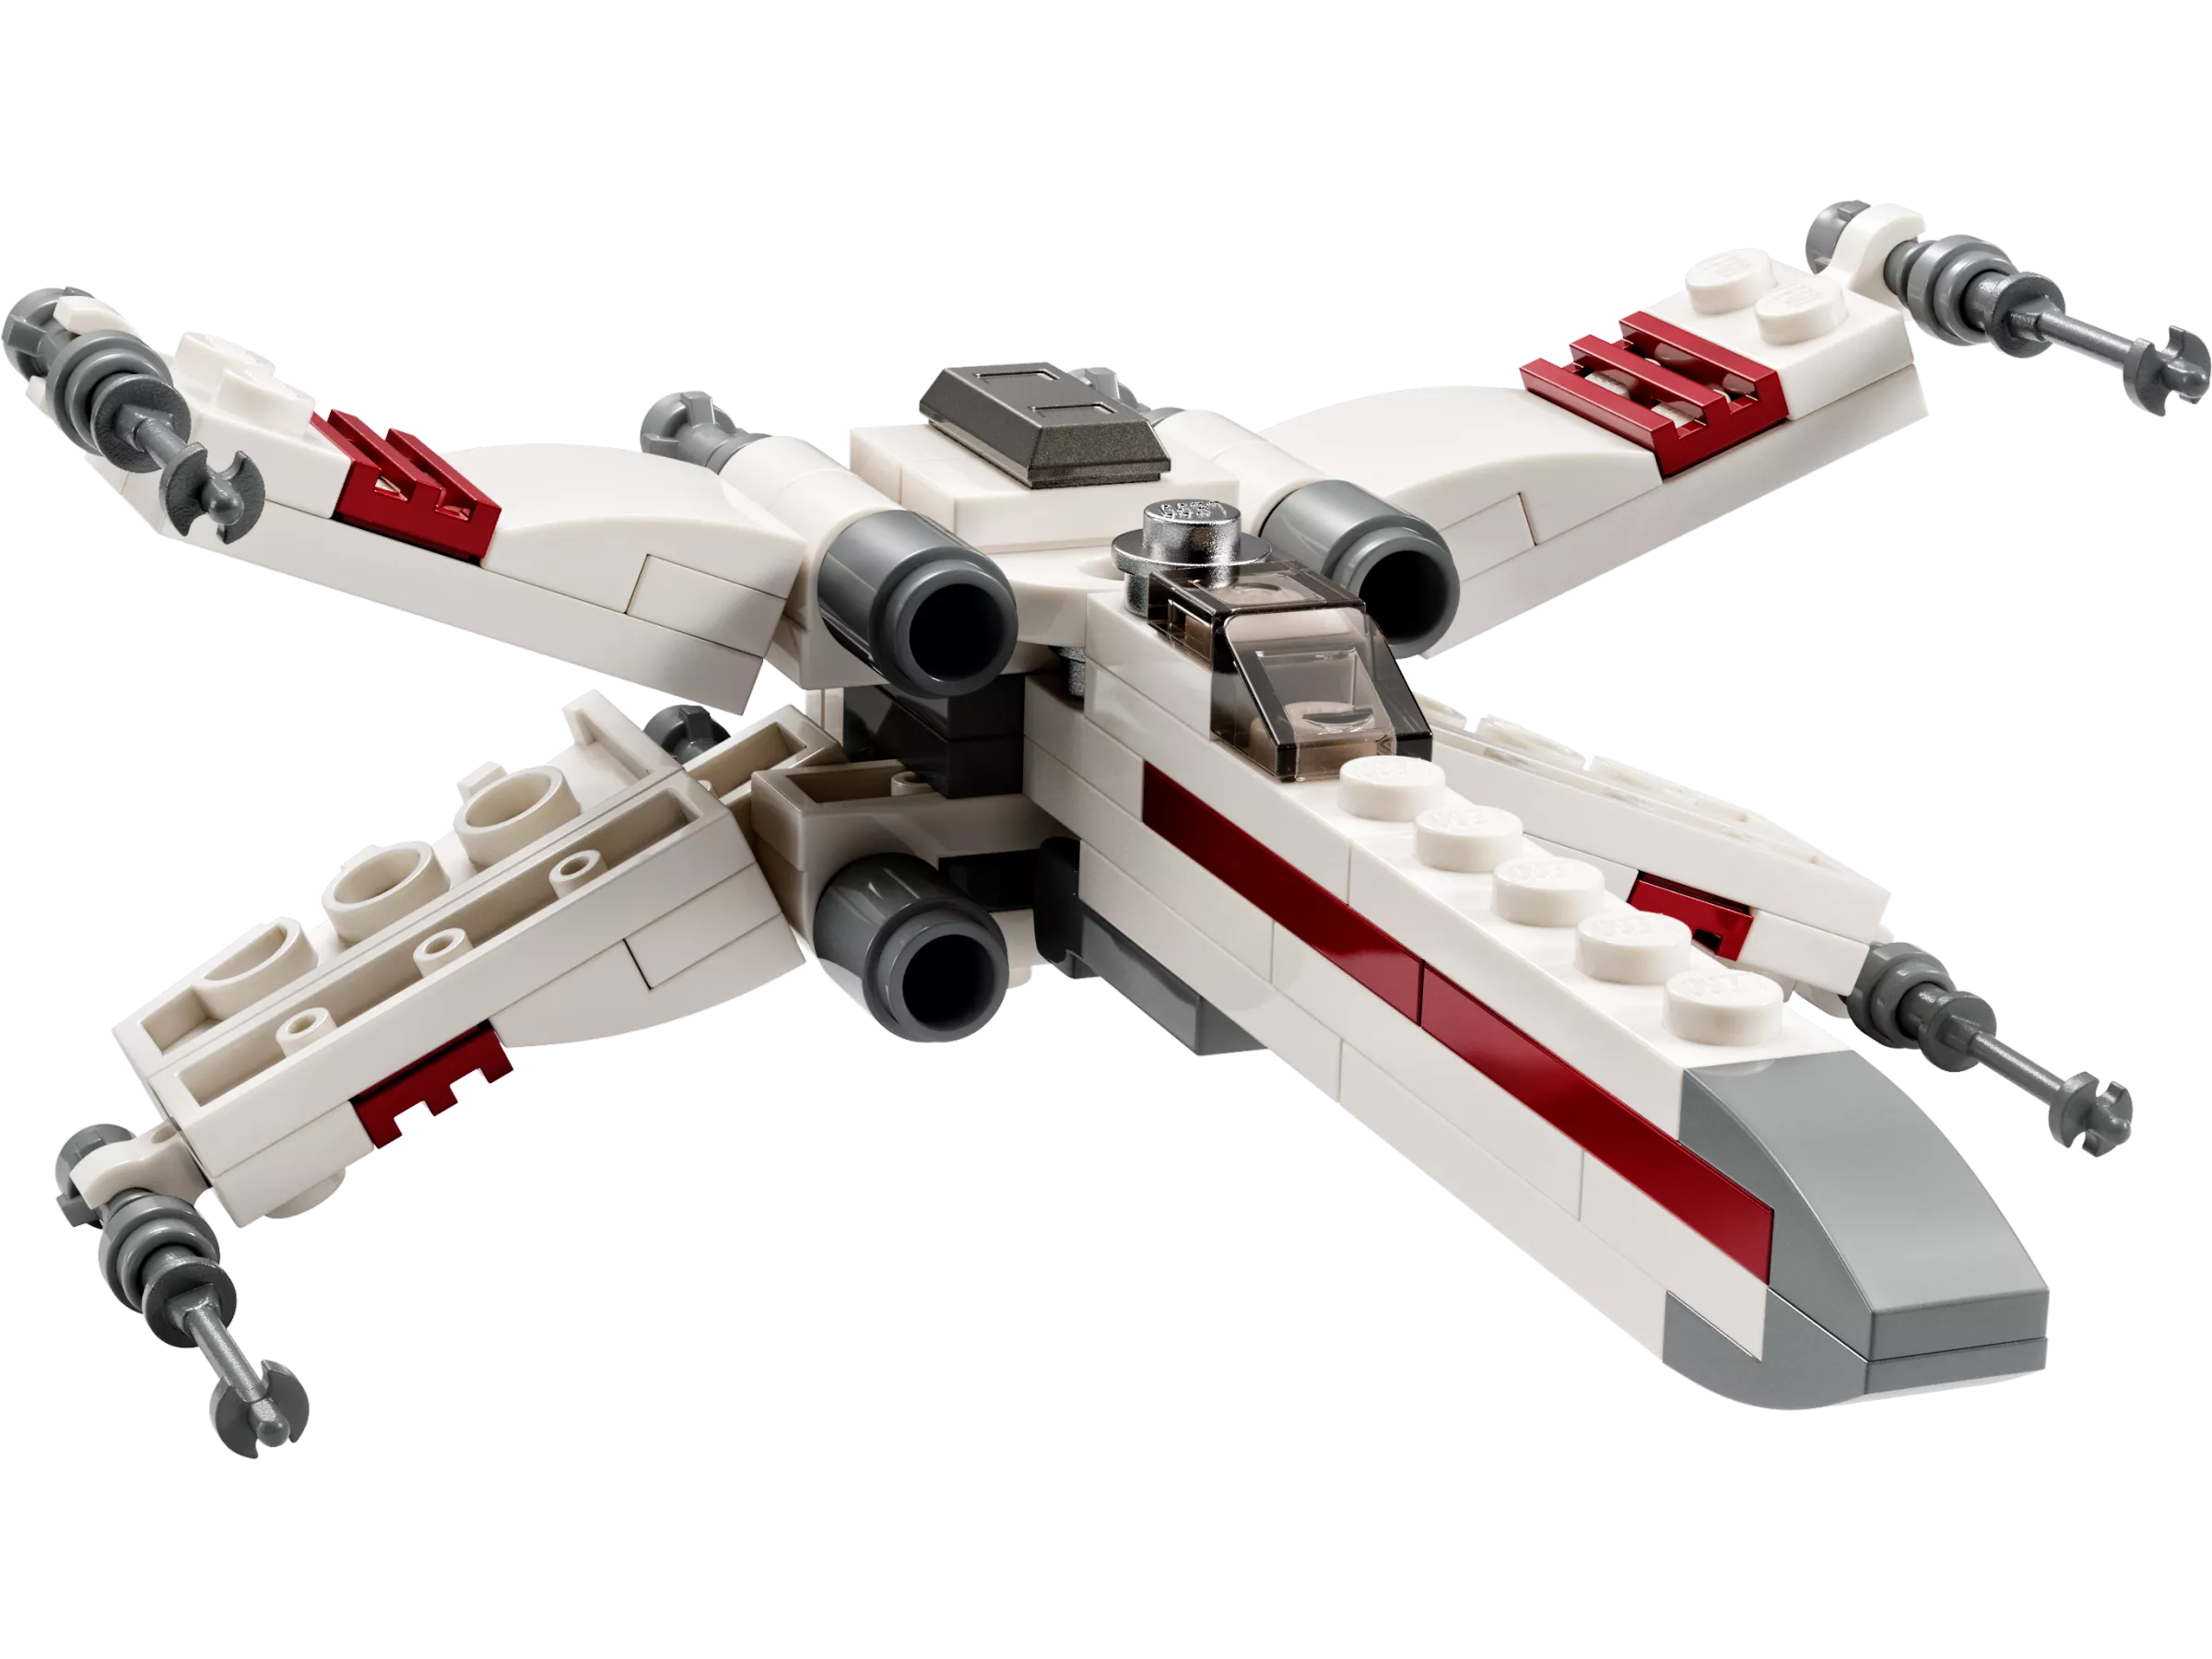 LEGO 30654 X-Wing Starfighter™